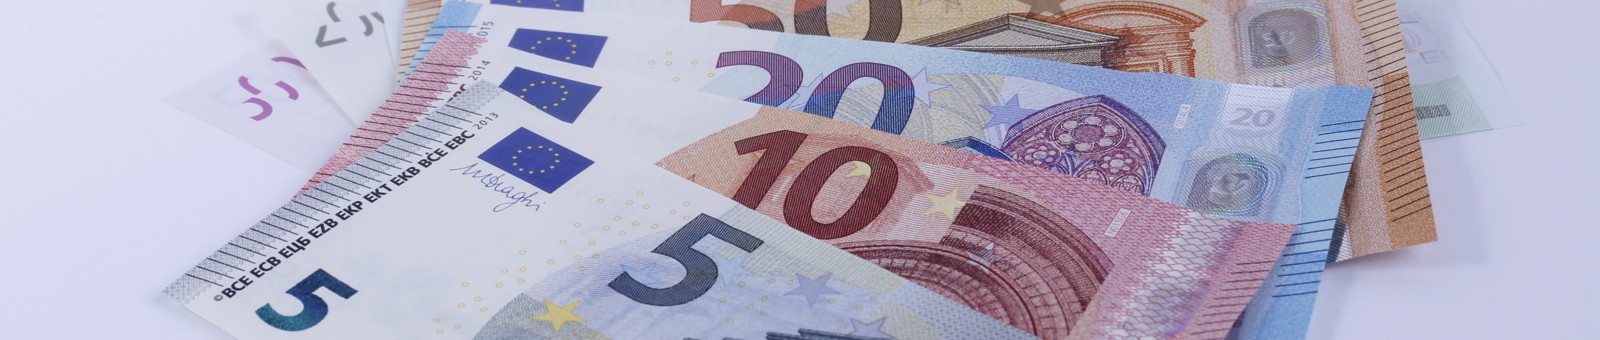     Euro-Banknoten - Währung 